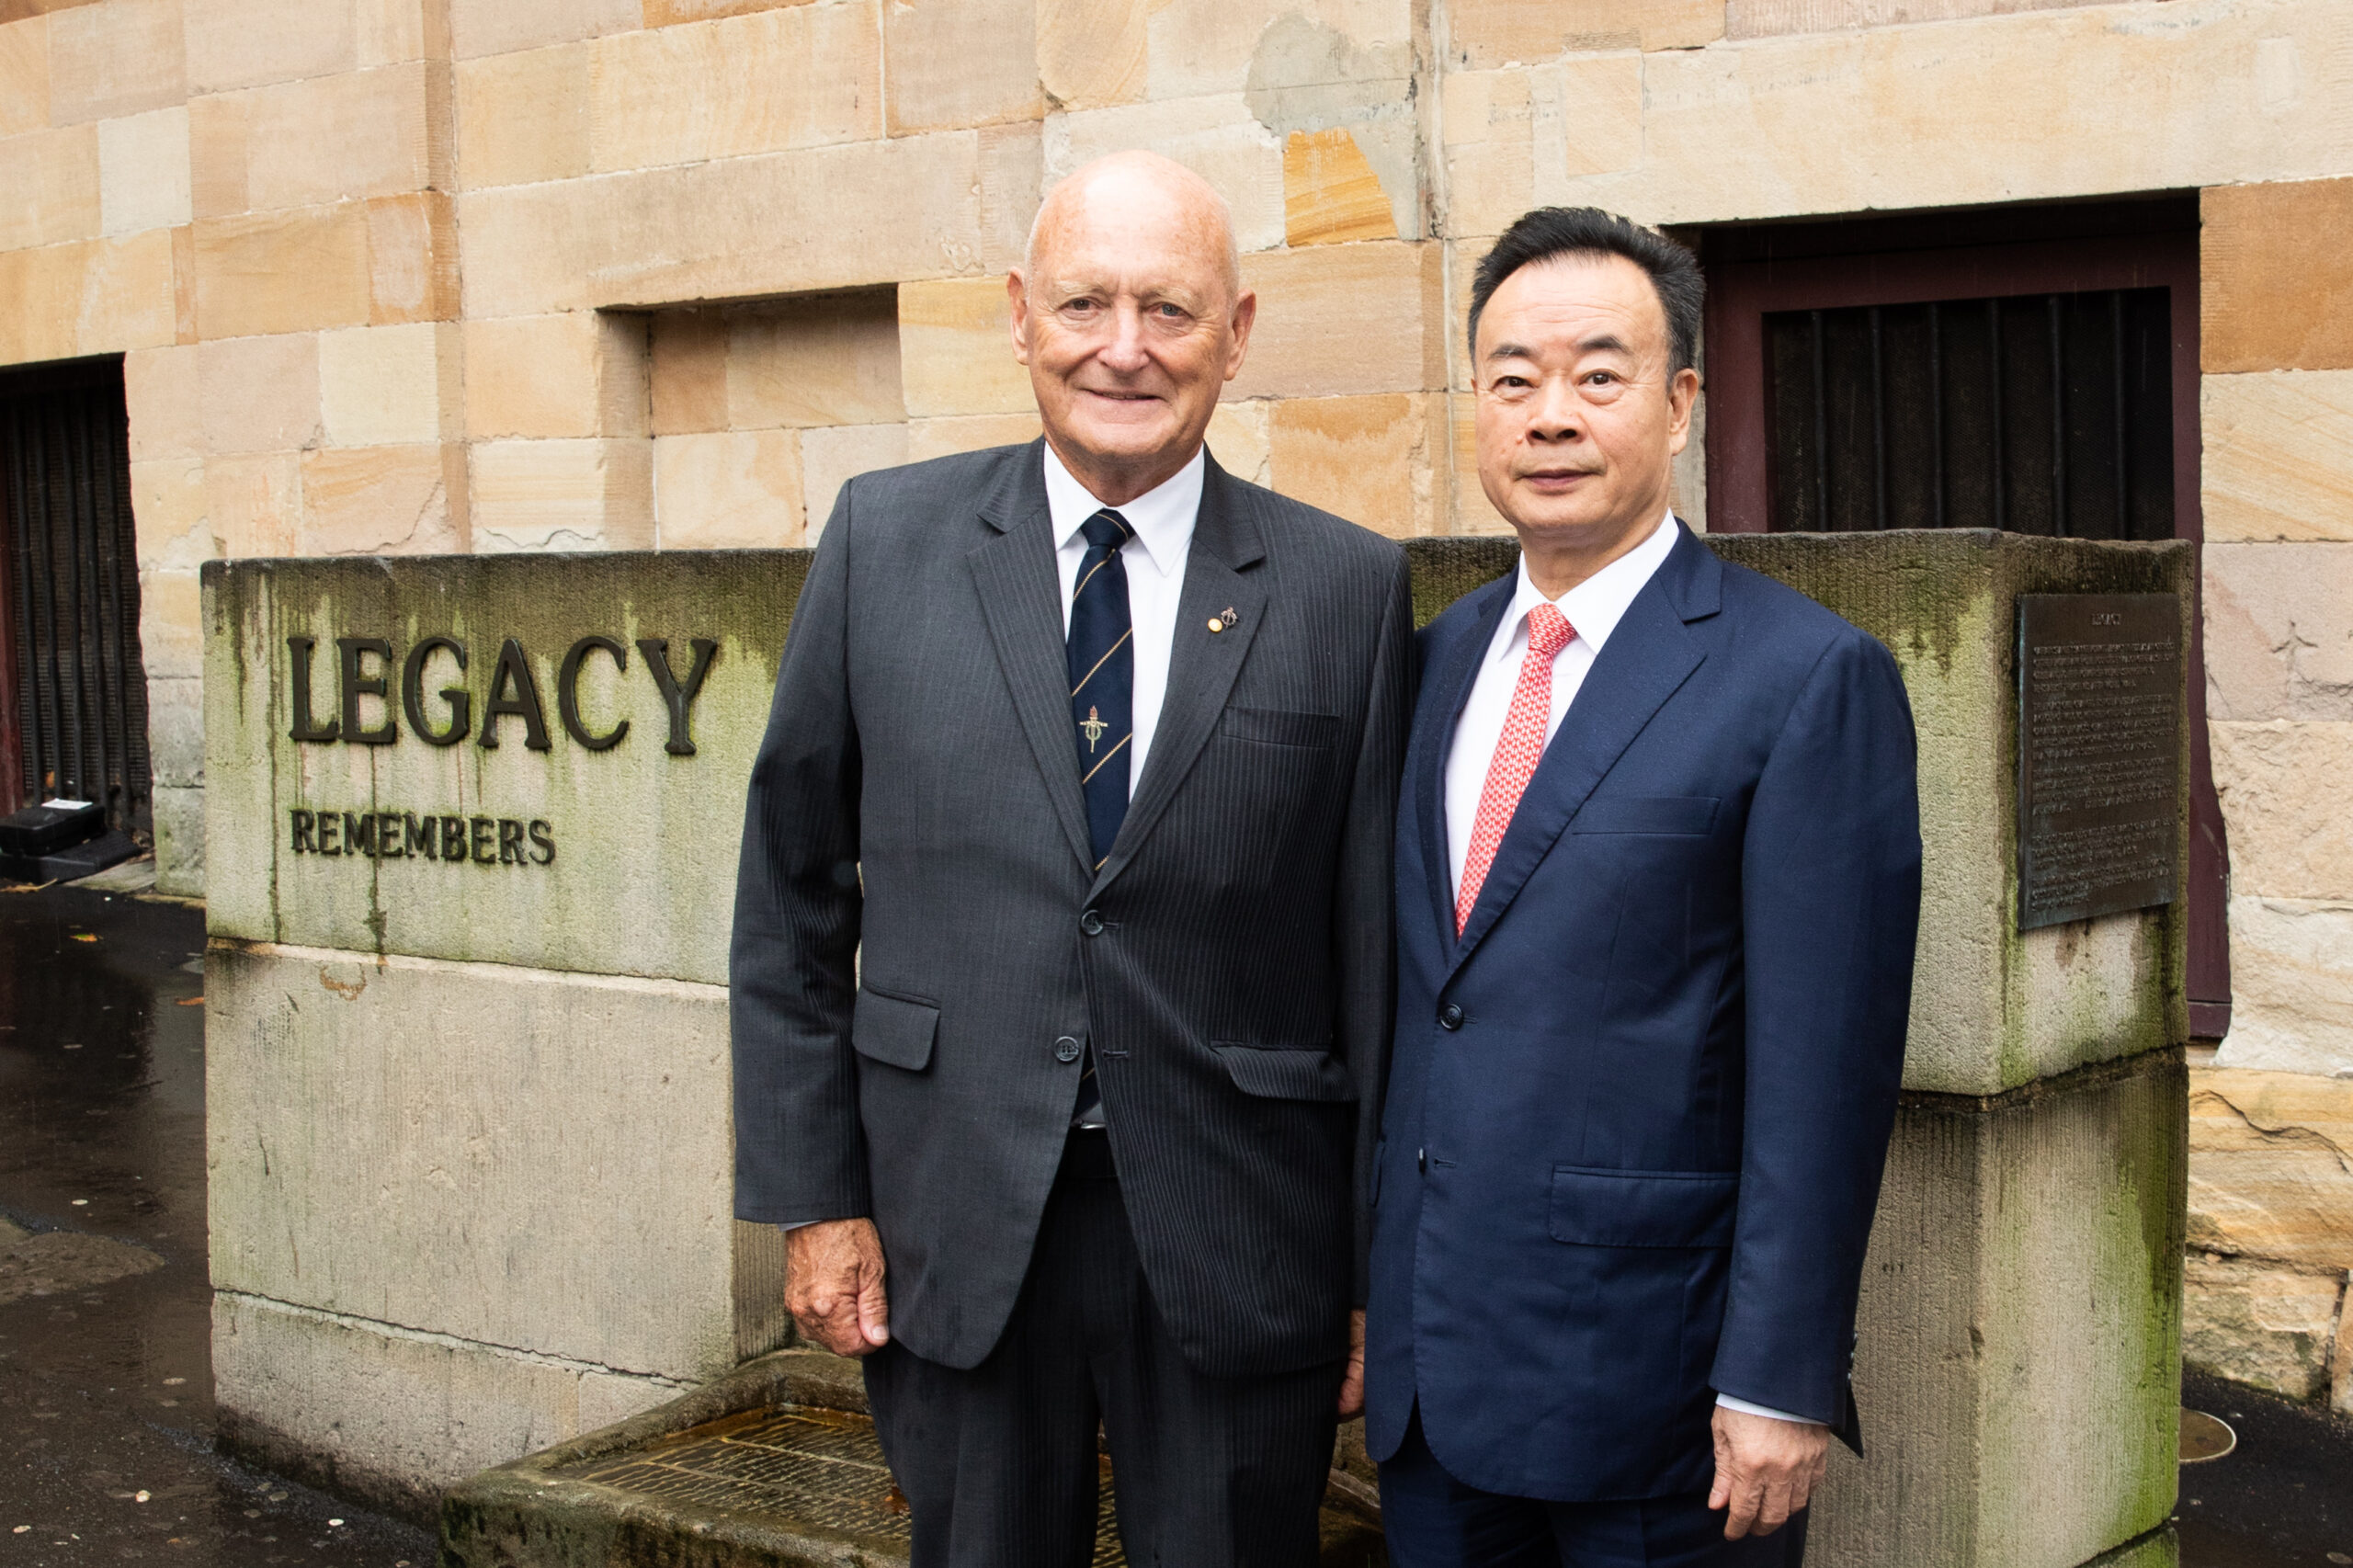 Dr Chau Chak Wing and Legacy Australia Chairman Rick Cranna